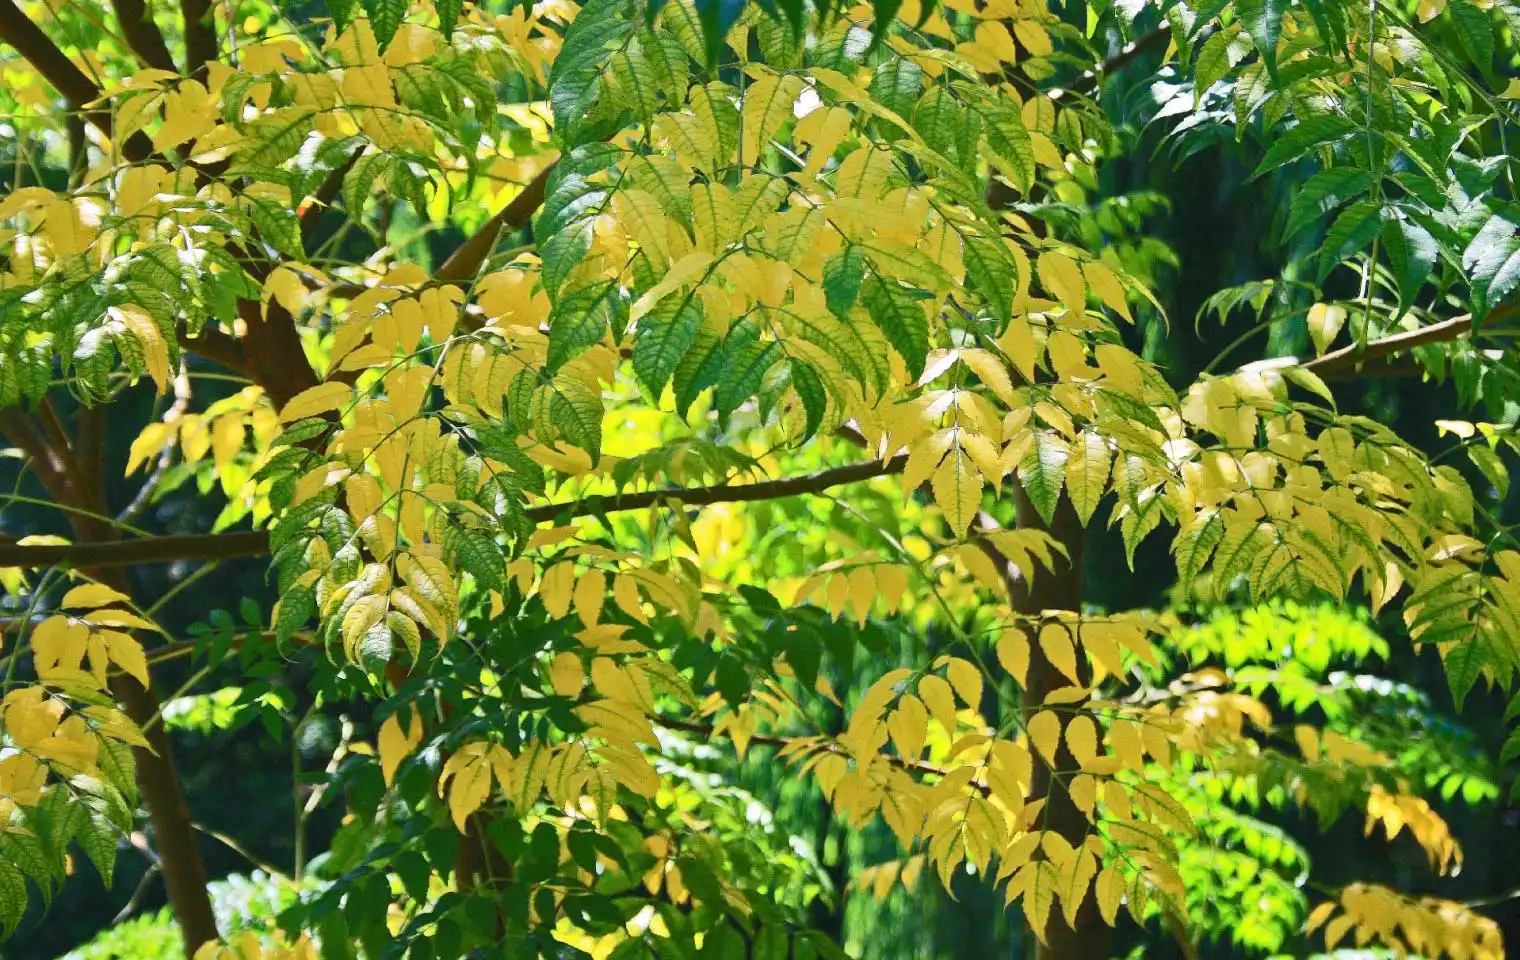 زرد شدن درخت میوه https://www.publicdomainpictures.net/en/view-image.php?image=211974&picture=green-leaves-turning-yellow